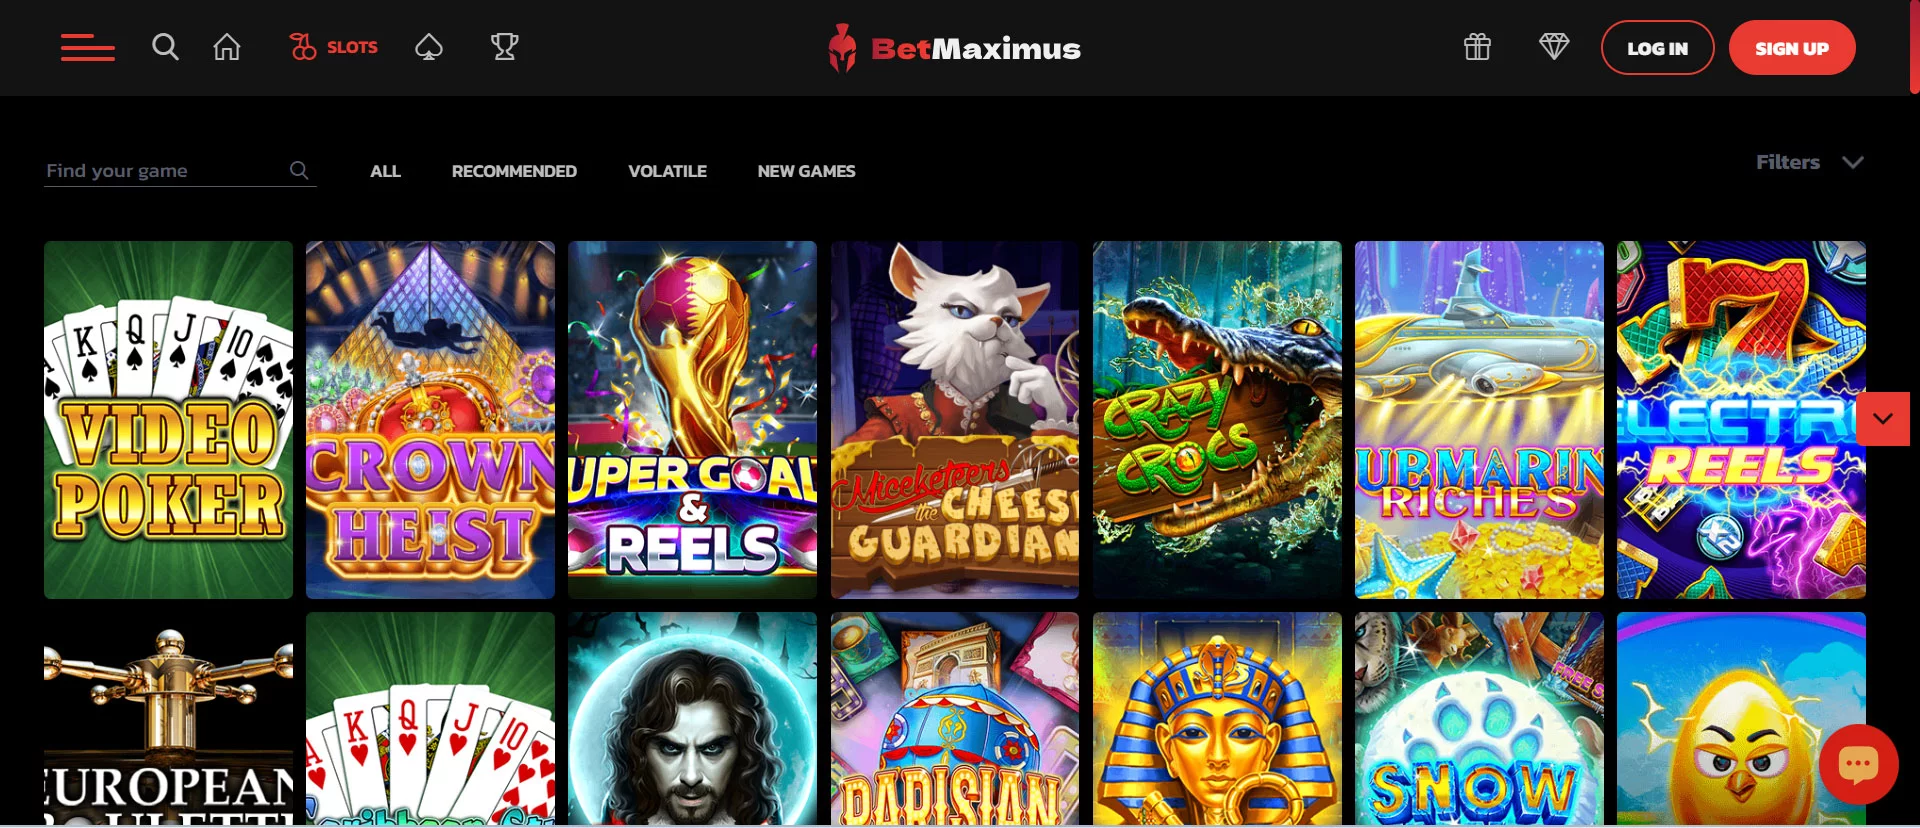 BetMaximus Casino Slot Games